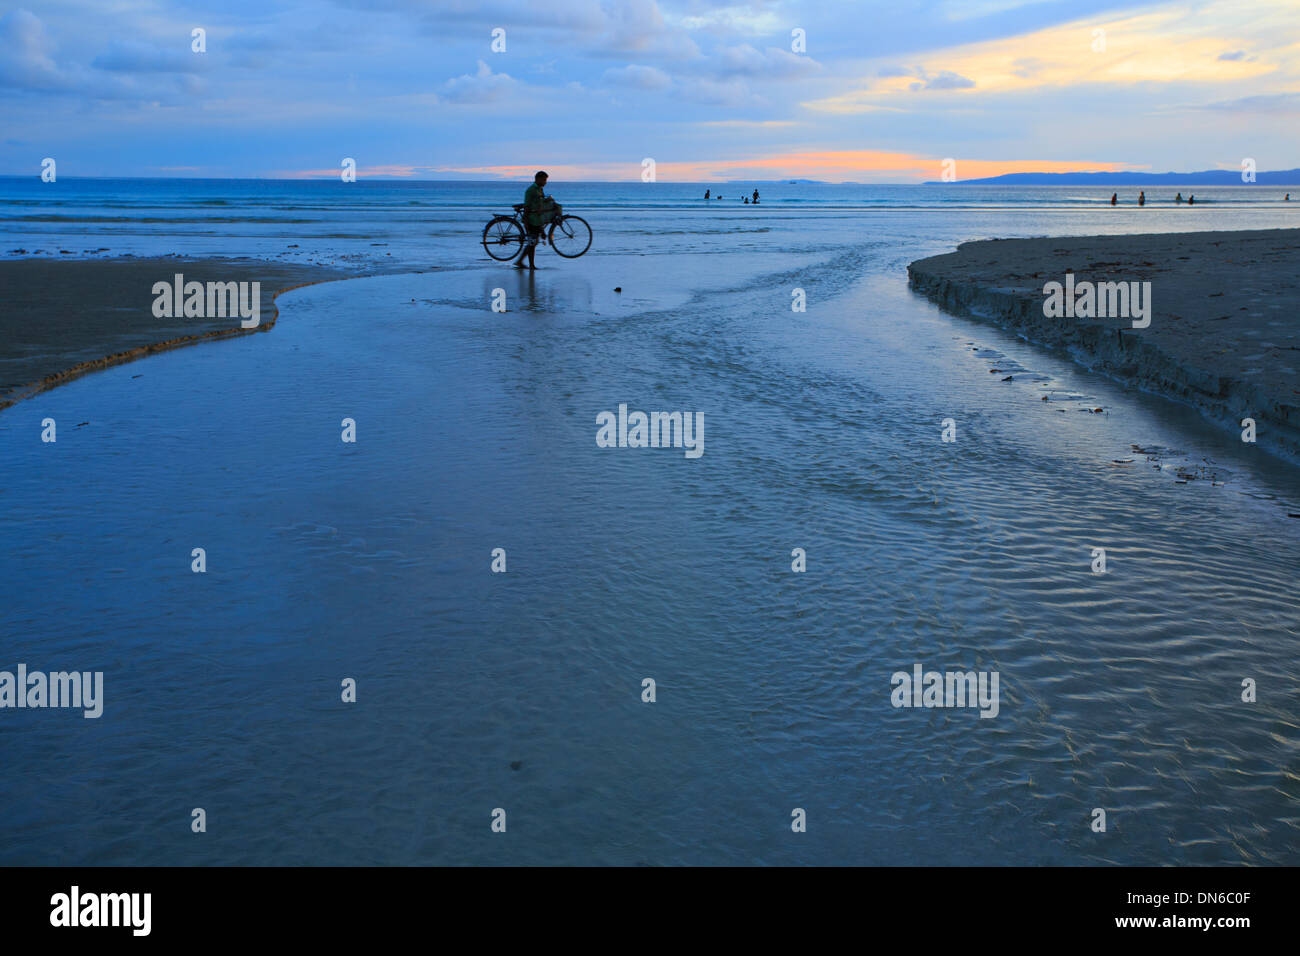 A scene from Havelock Island, Andaman (Radhanagar Beach) Stock Photo